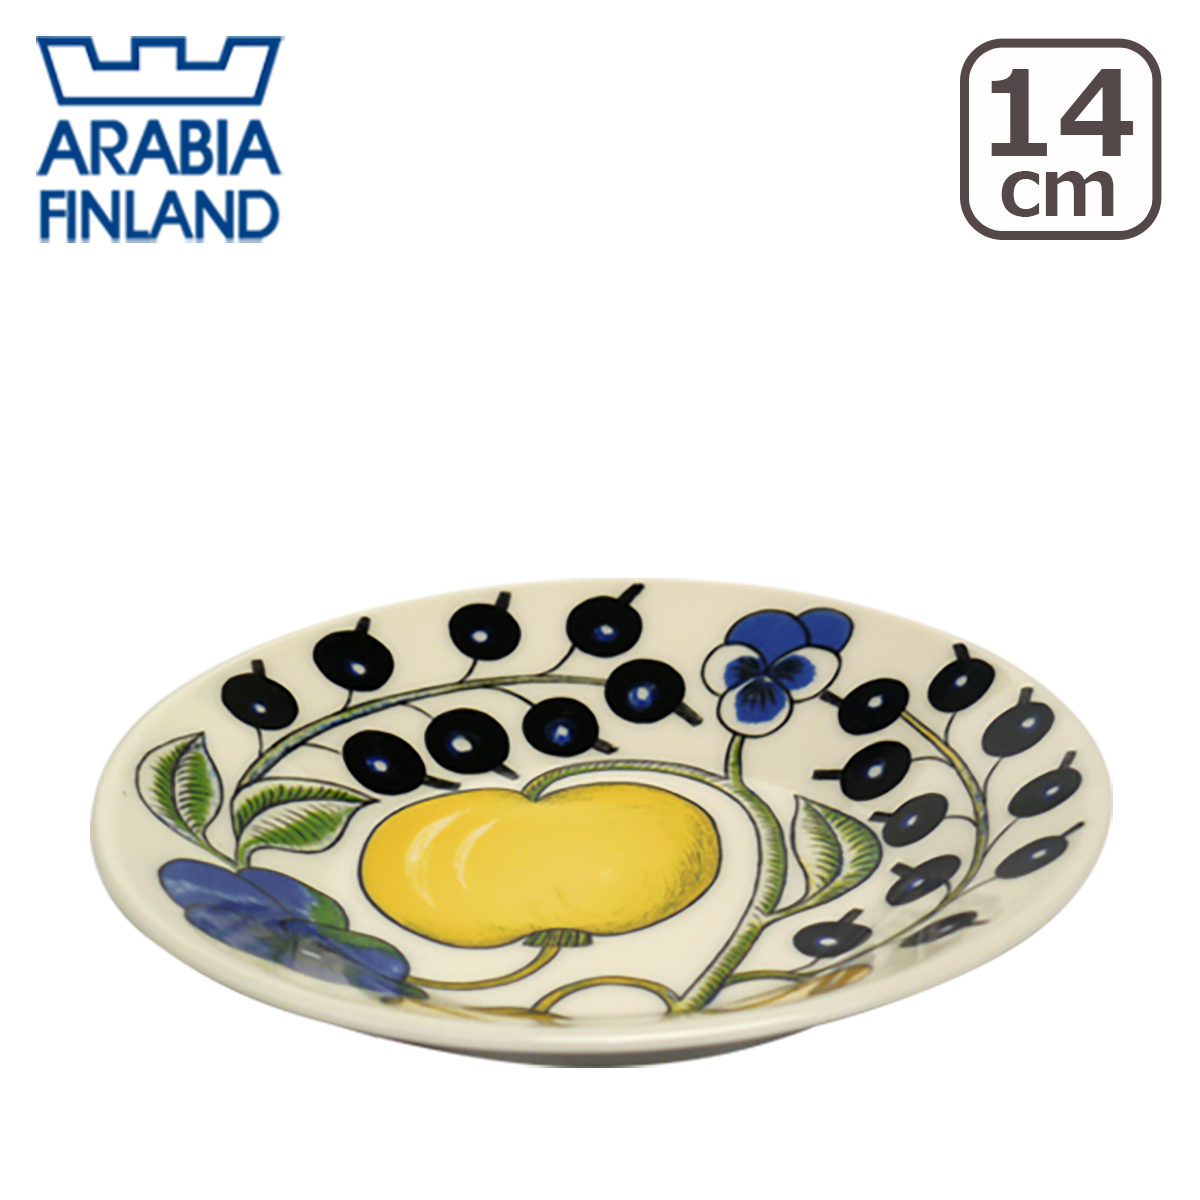 Finland Arabia Paratiisi Saucer 14 cm